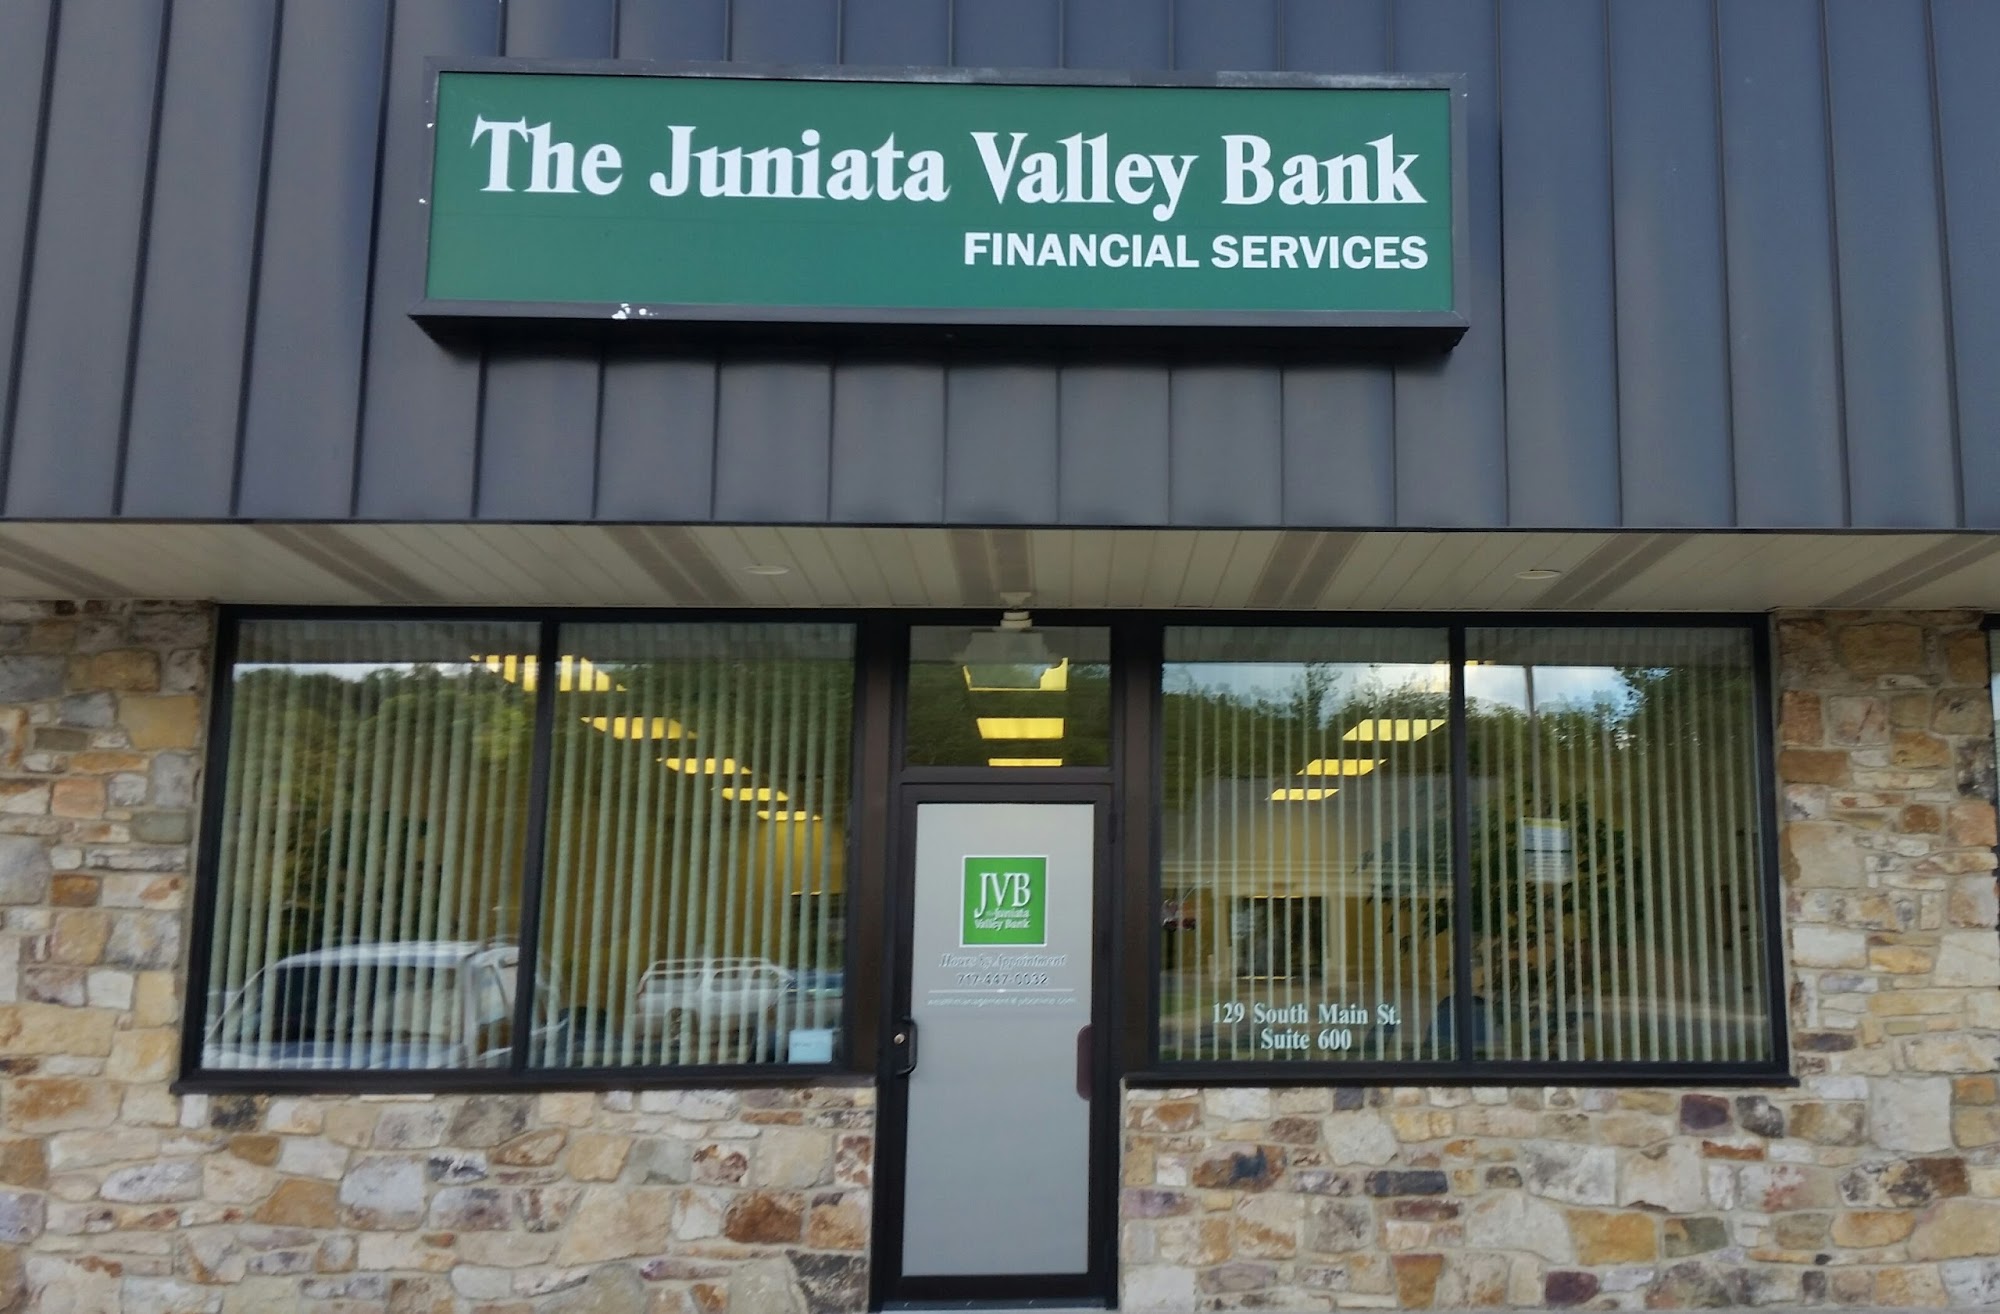 Juniata Valley Bank Financial Services Office